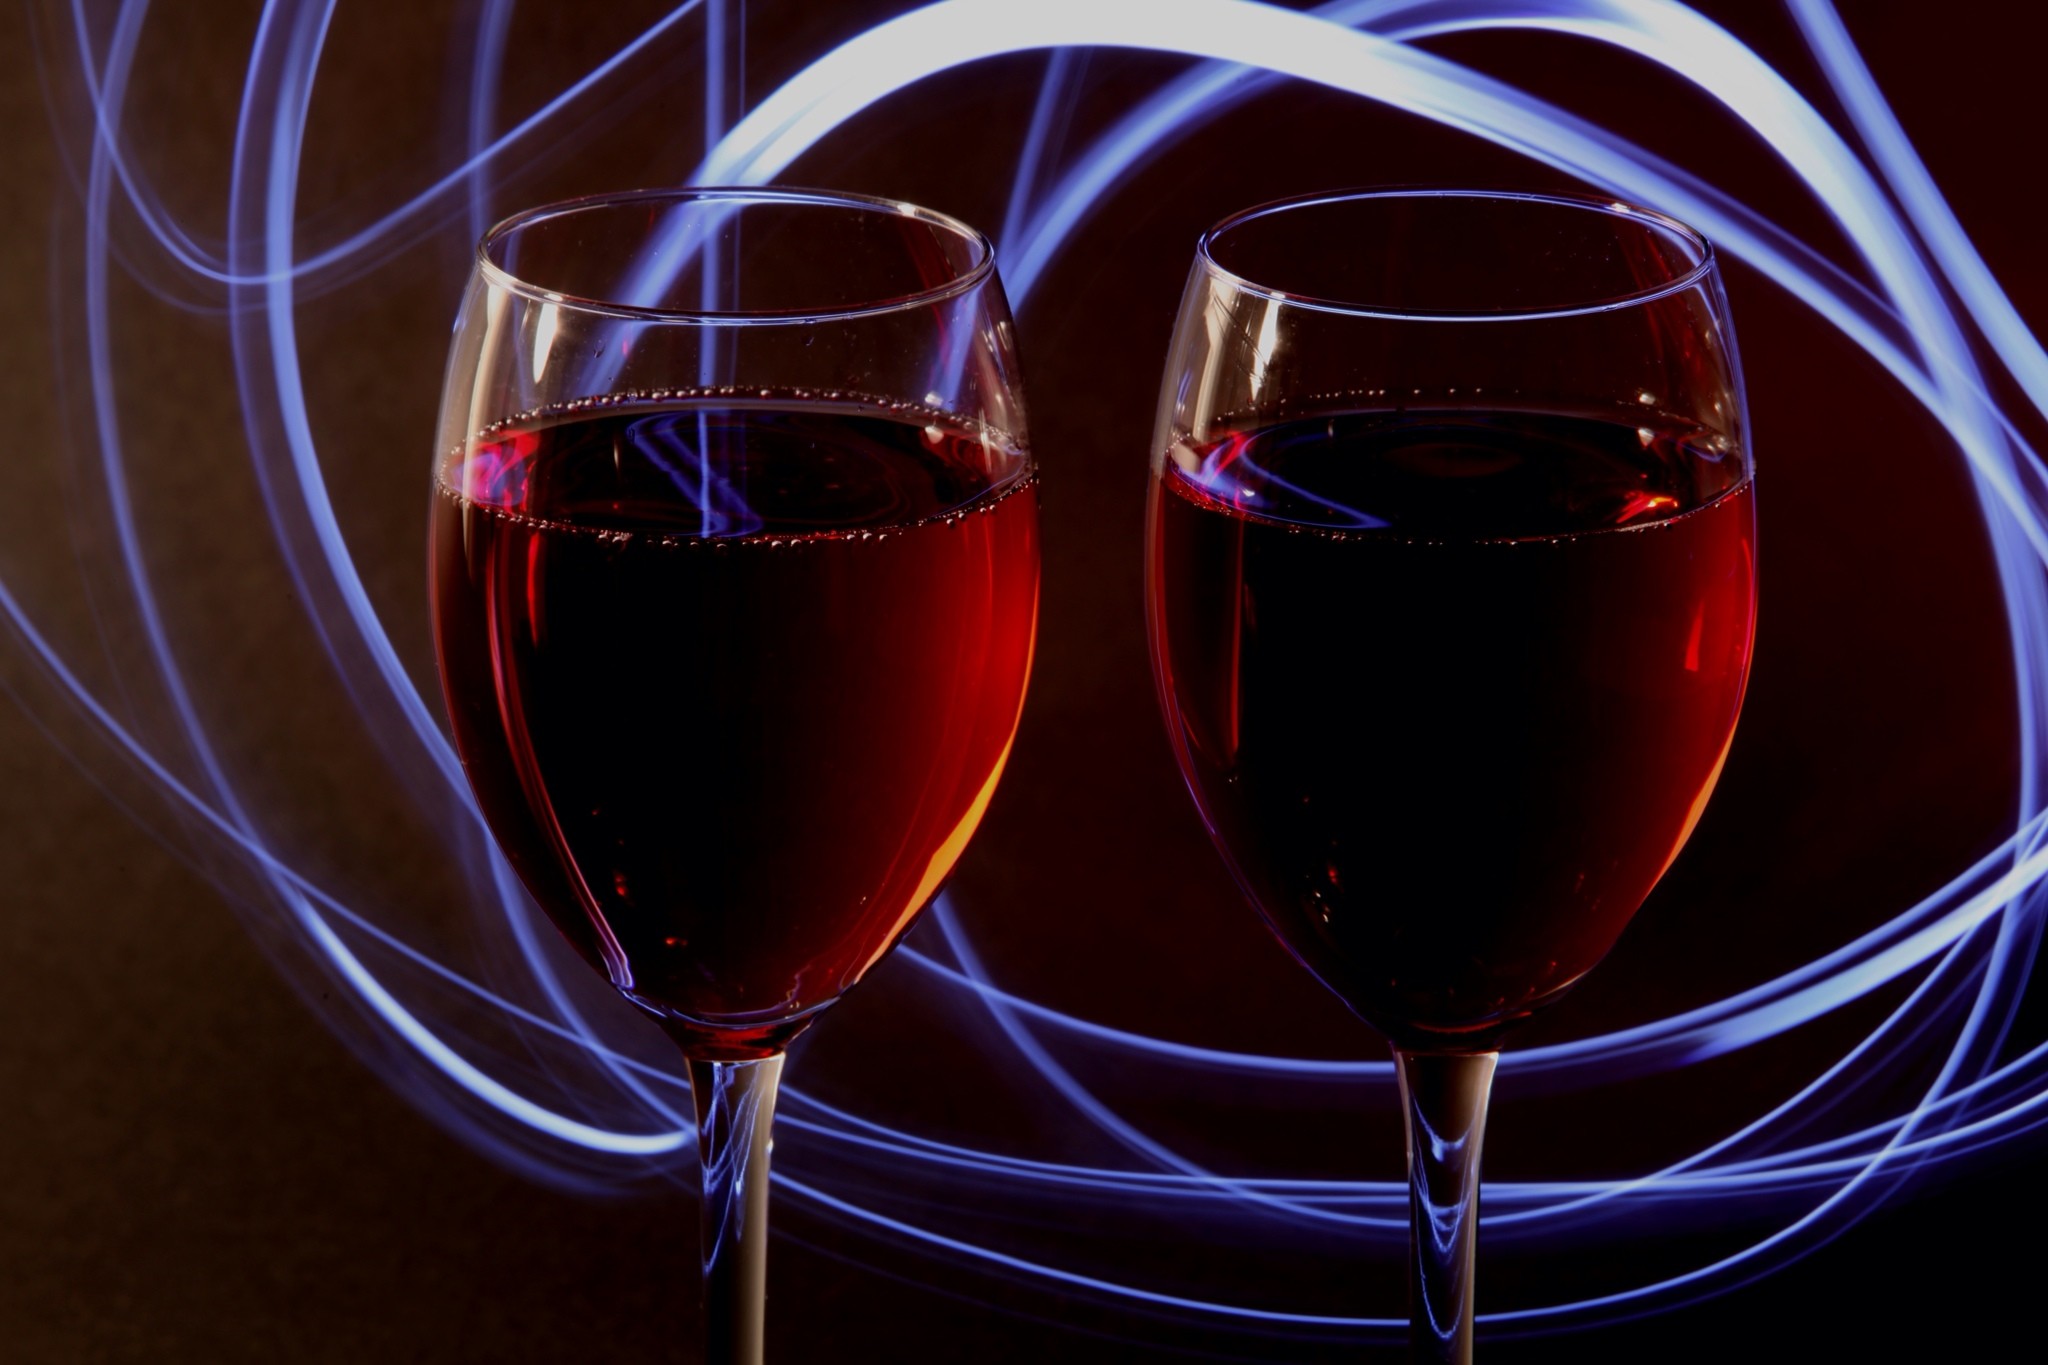 Вином наполнялся бокал. Бокал вина. Бокал красного вина. Бокал с вином. Фужер с вином.